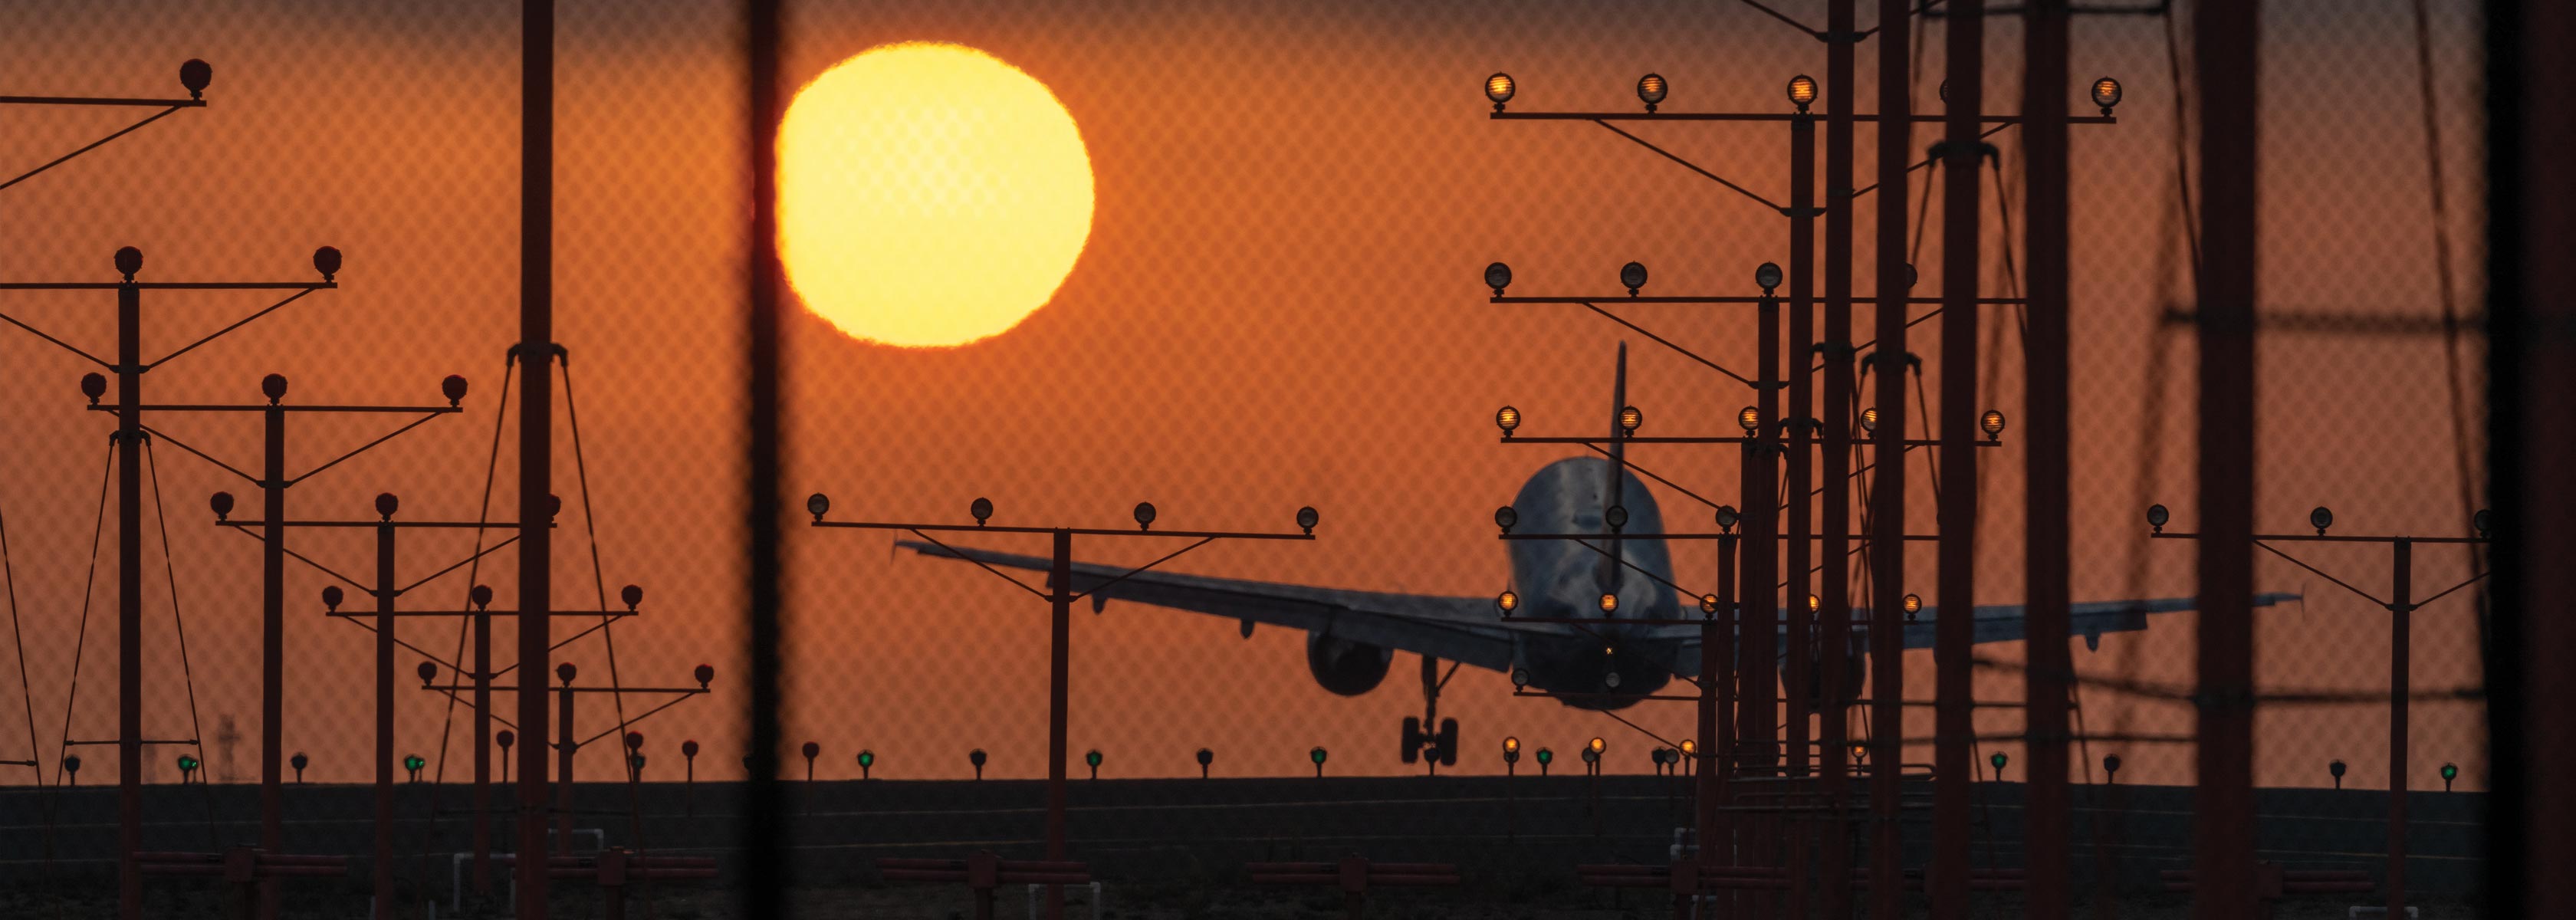 Airplane taking off at sunrise by Glenn Beltz